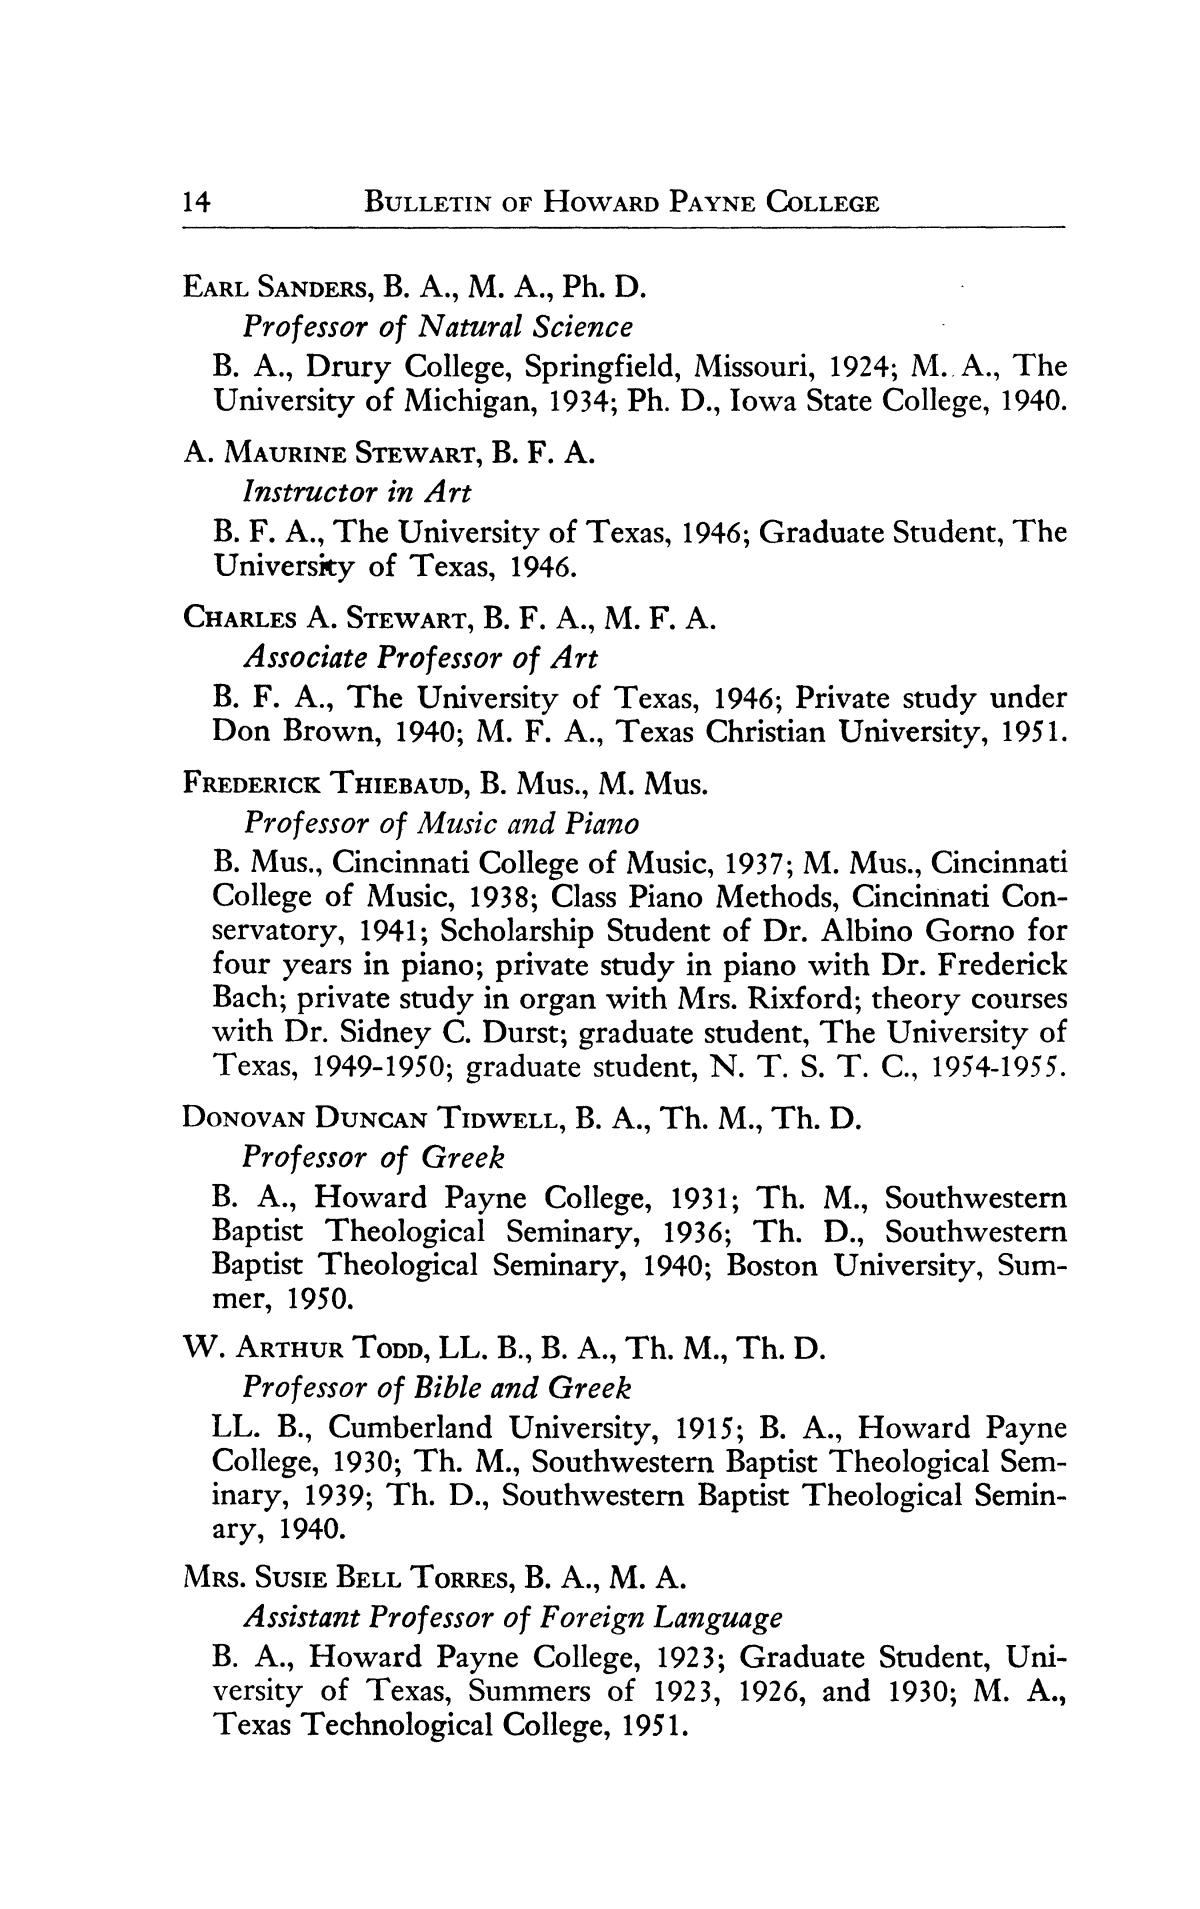 Catalog of Howard Payne College, 1954-1955
                                                
                                                    14
                                                